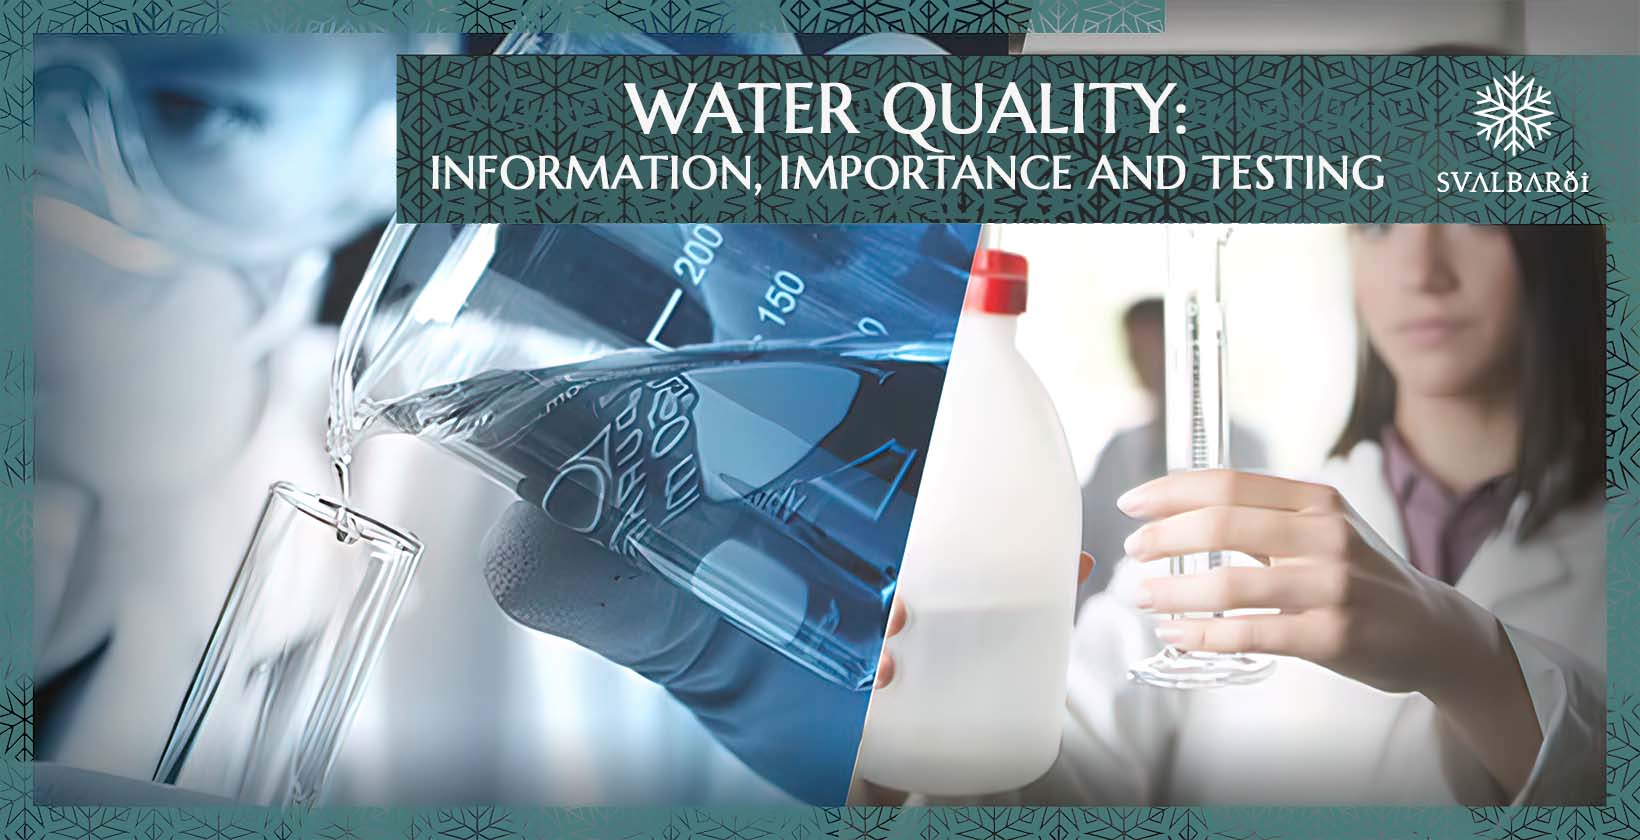 Water :: Aqua Pure Water 200 Ml 40 Bottle 50 (Cartoon Offer) - General  Product